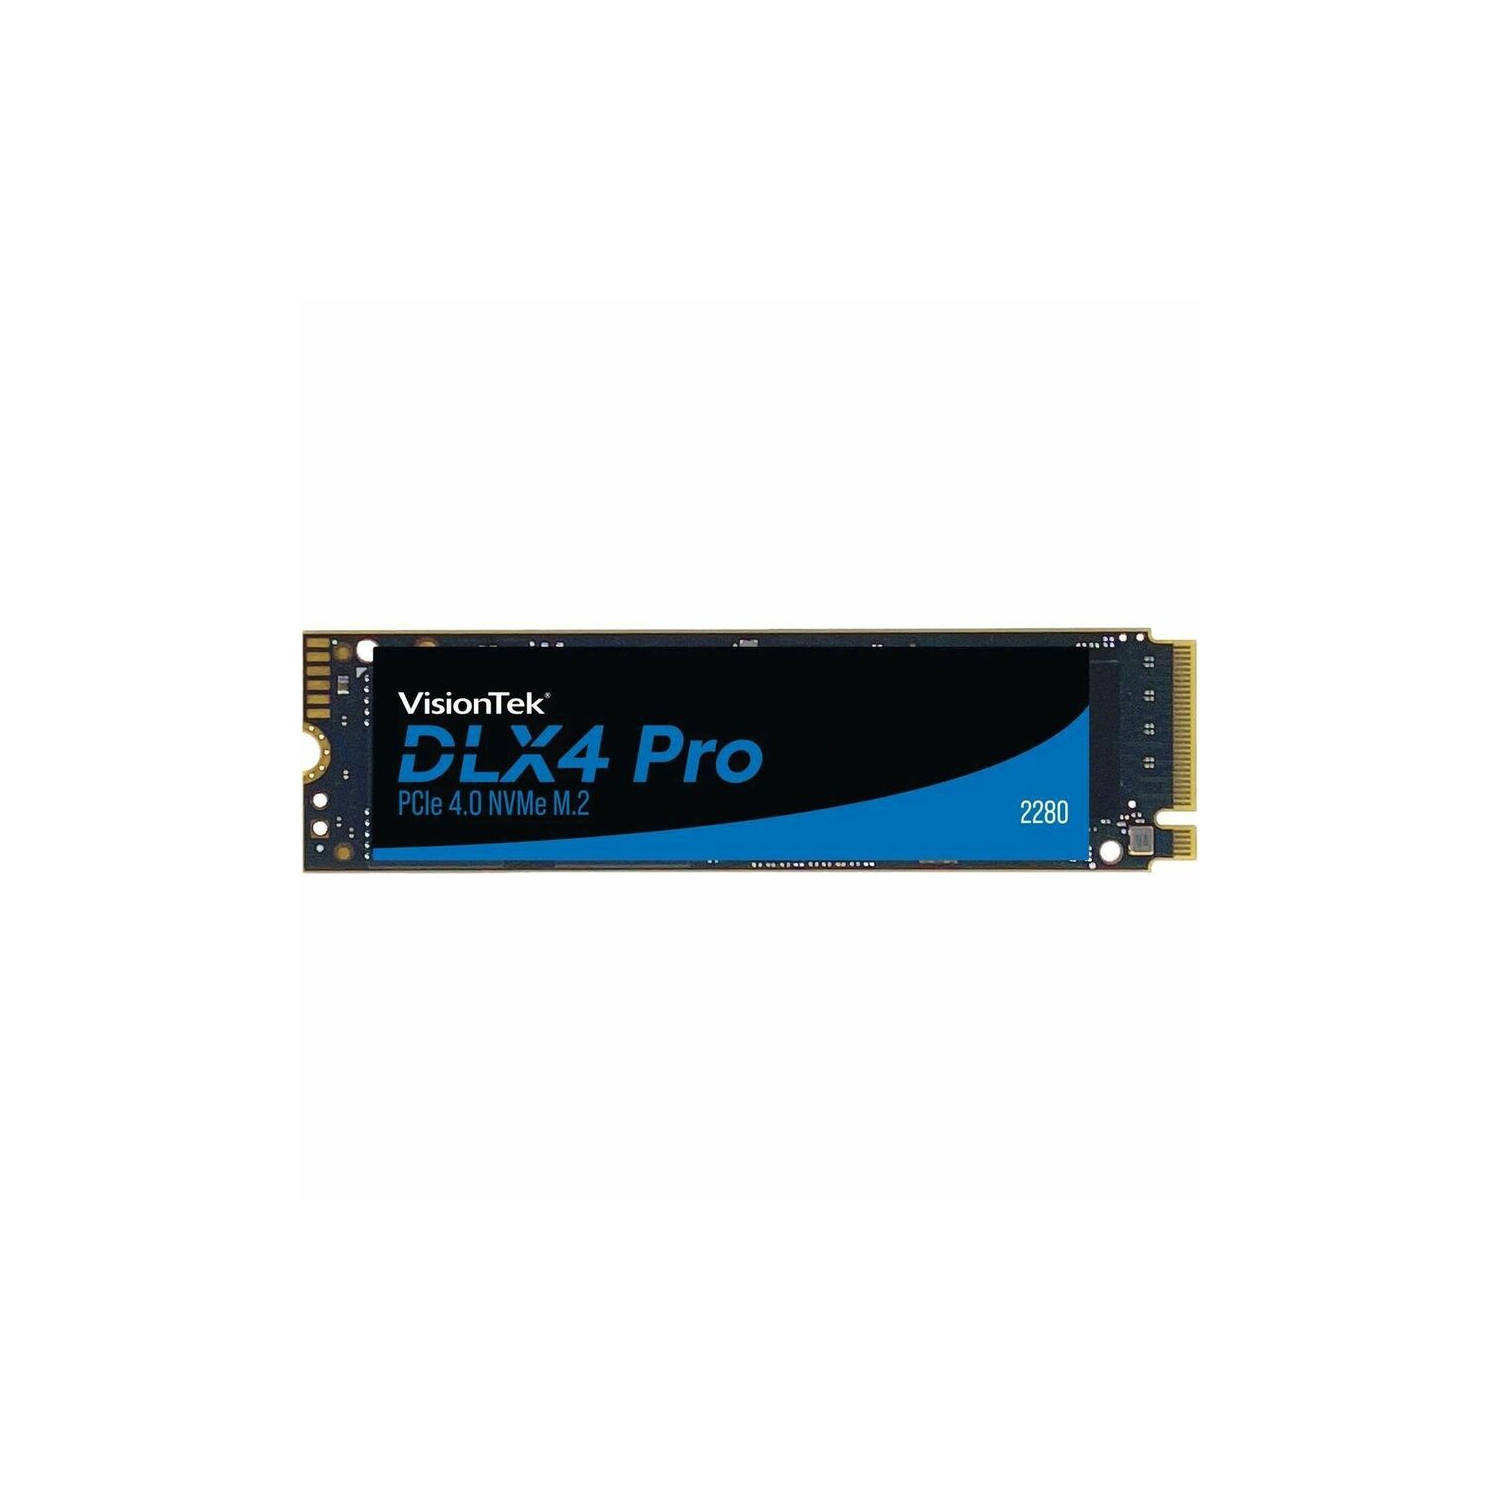 VisionTek DLX4 Pro 2280 M.2 PCIe 4.0 x4 SSD (NVMe) 901568